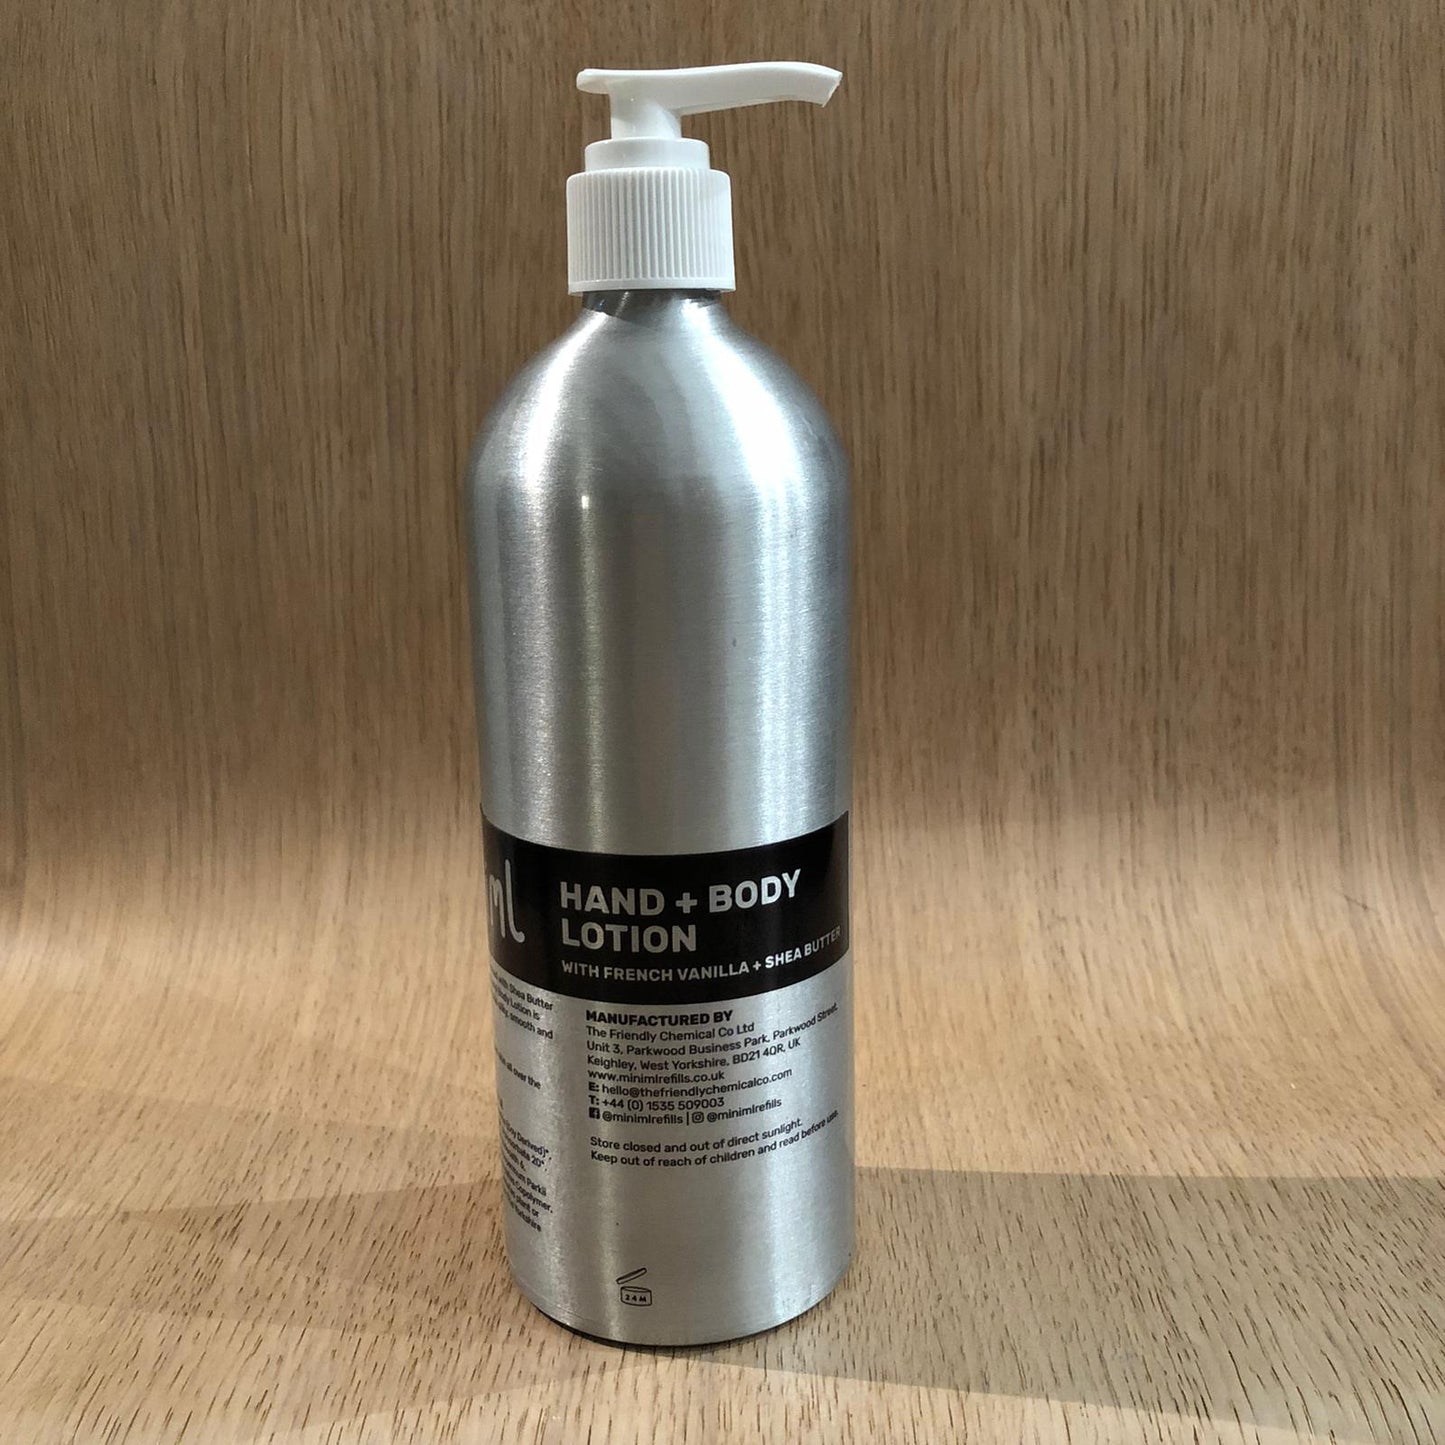 Bottle - Aluminium With Pump 500 ml